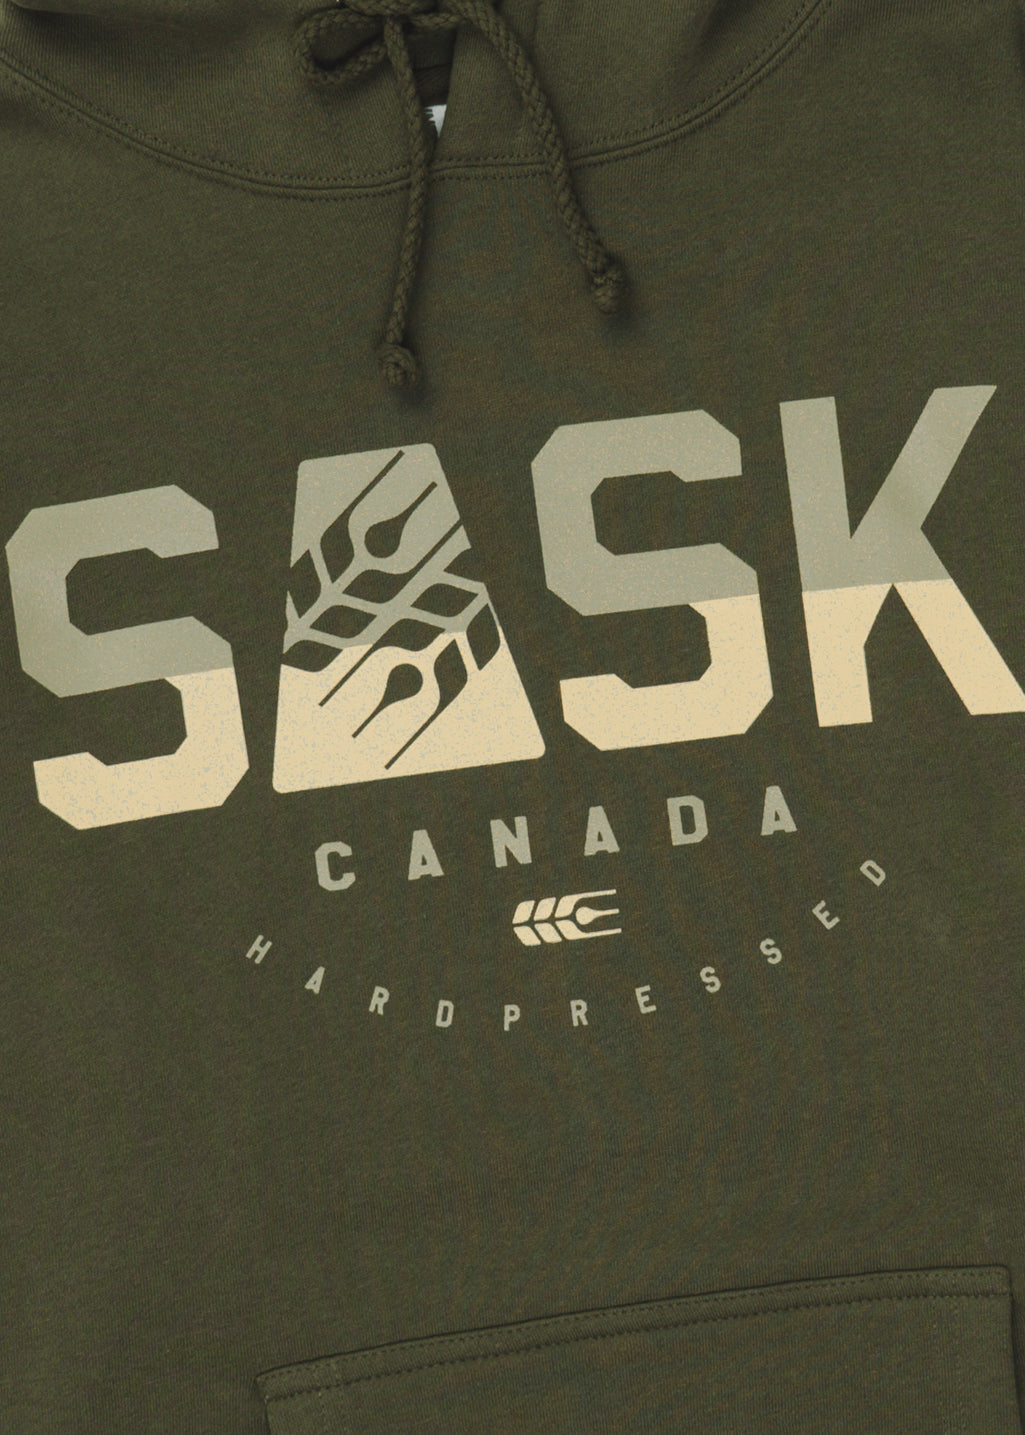 SASK Icon Two Tone Sweater | Foliage | Unisex - Hardpressed Print Studio Inc.